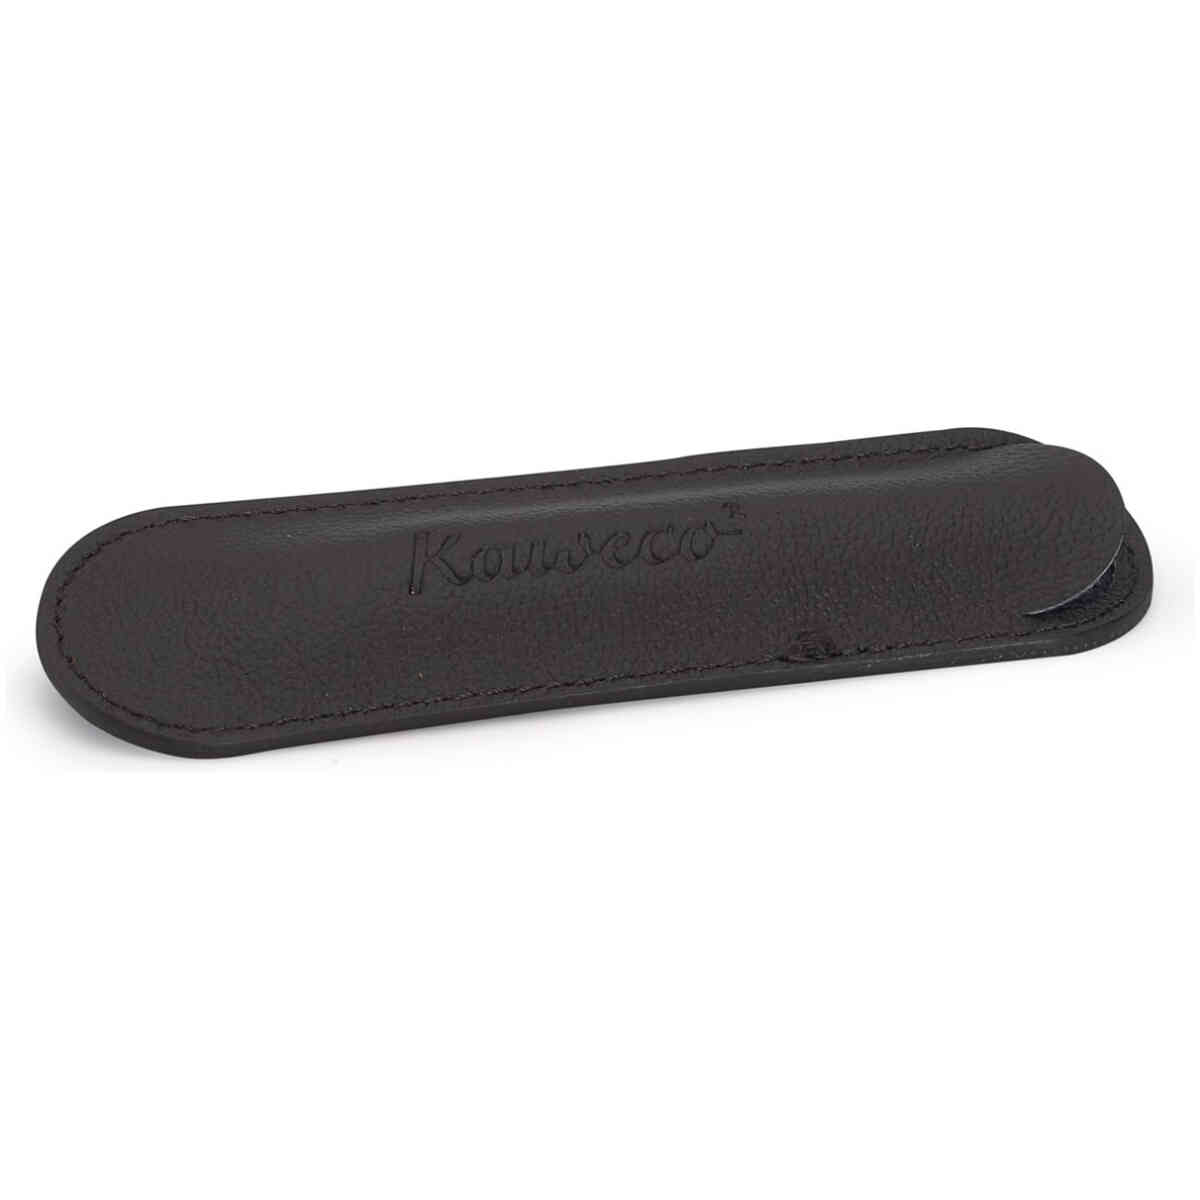 Kaweco 1 Pen Pouch Standard black s